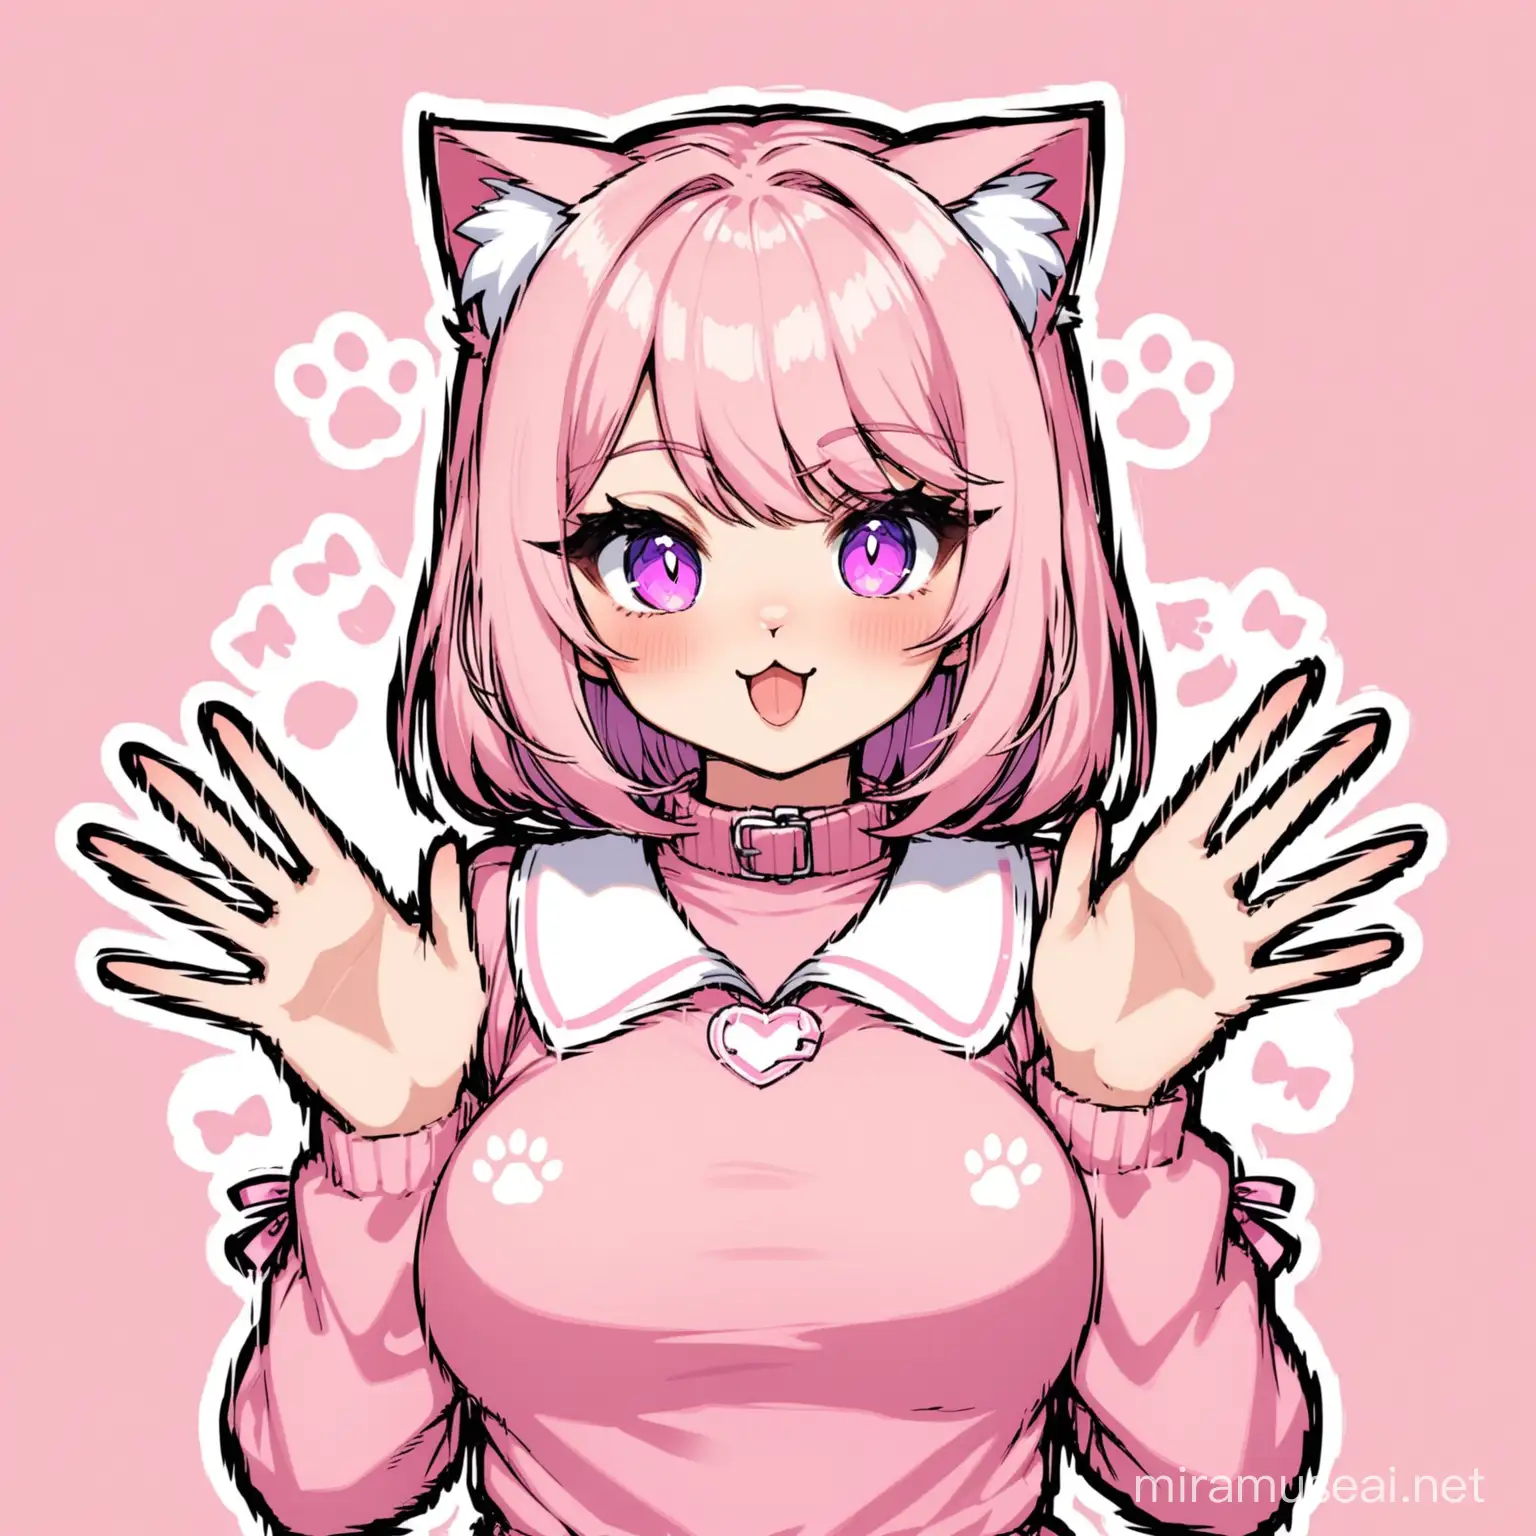 EGirl Cat Girl with Waving Hands and Peekaboo Decal